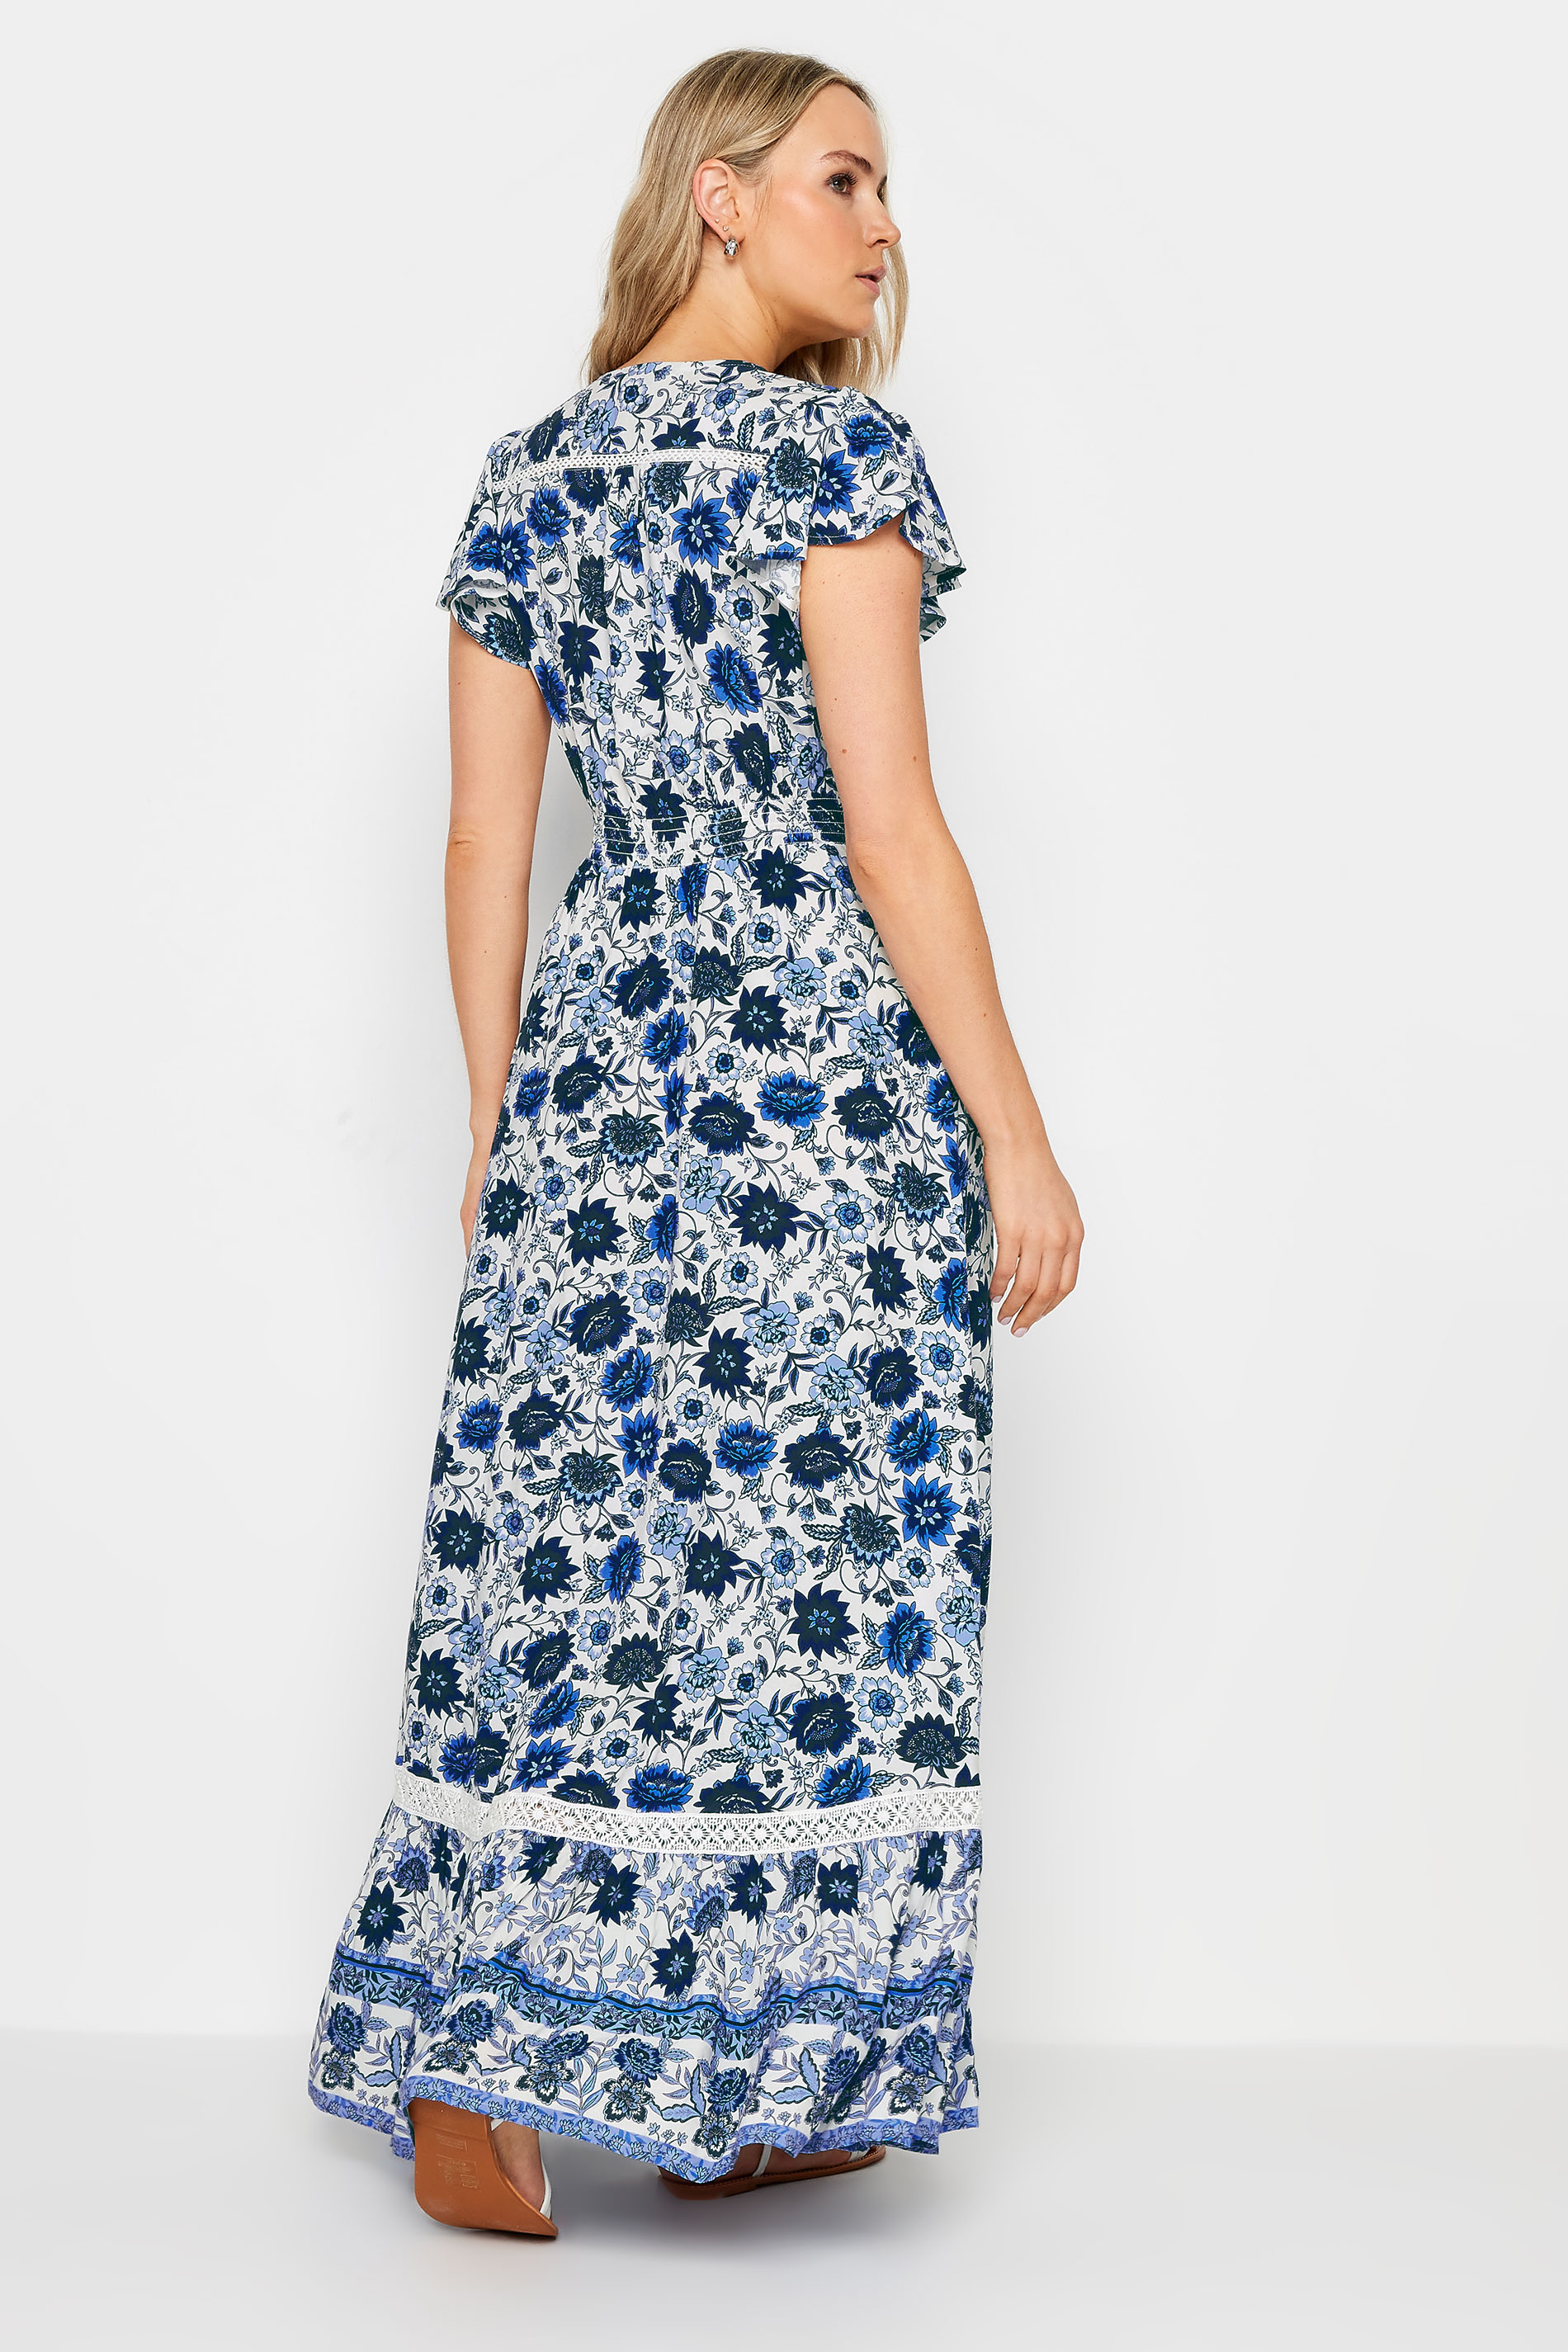 LTS Tall Women's Blue Floral Print Front Split Maxi Dress | Long Tall Sally  3